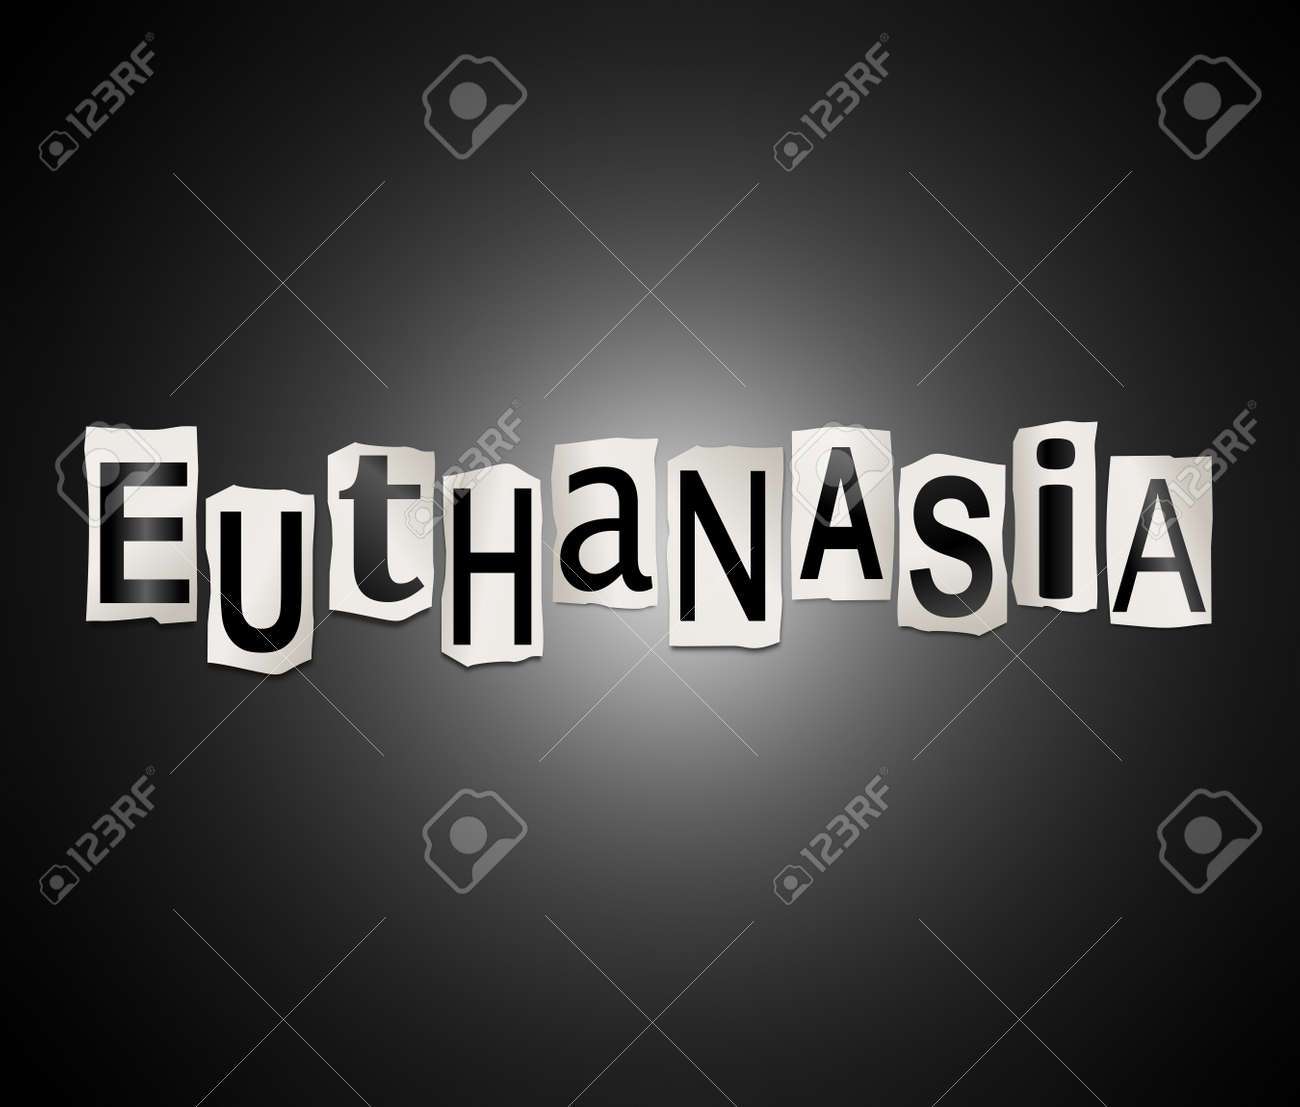 Euthanasia online puzzle